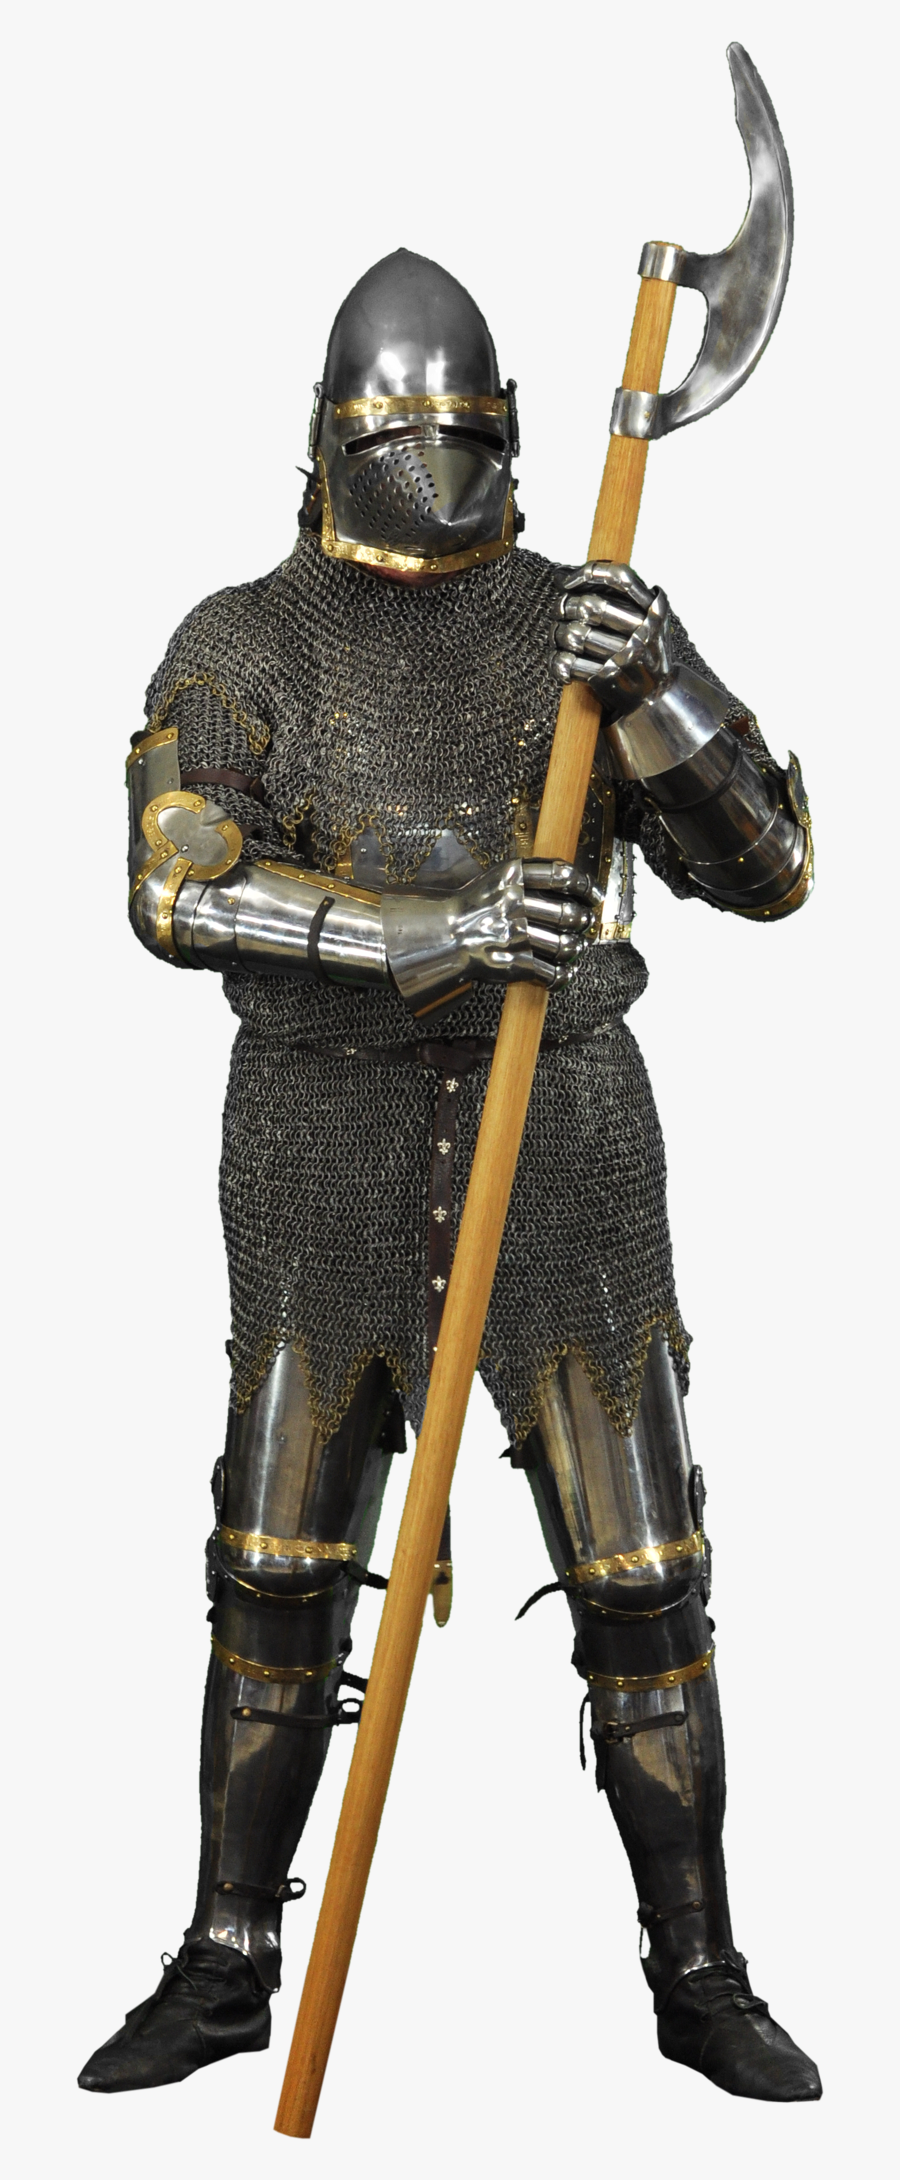 Hd Transparent Images Medival - Medieval Knight Png, Transparent Clipart